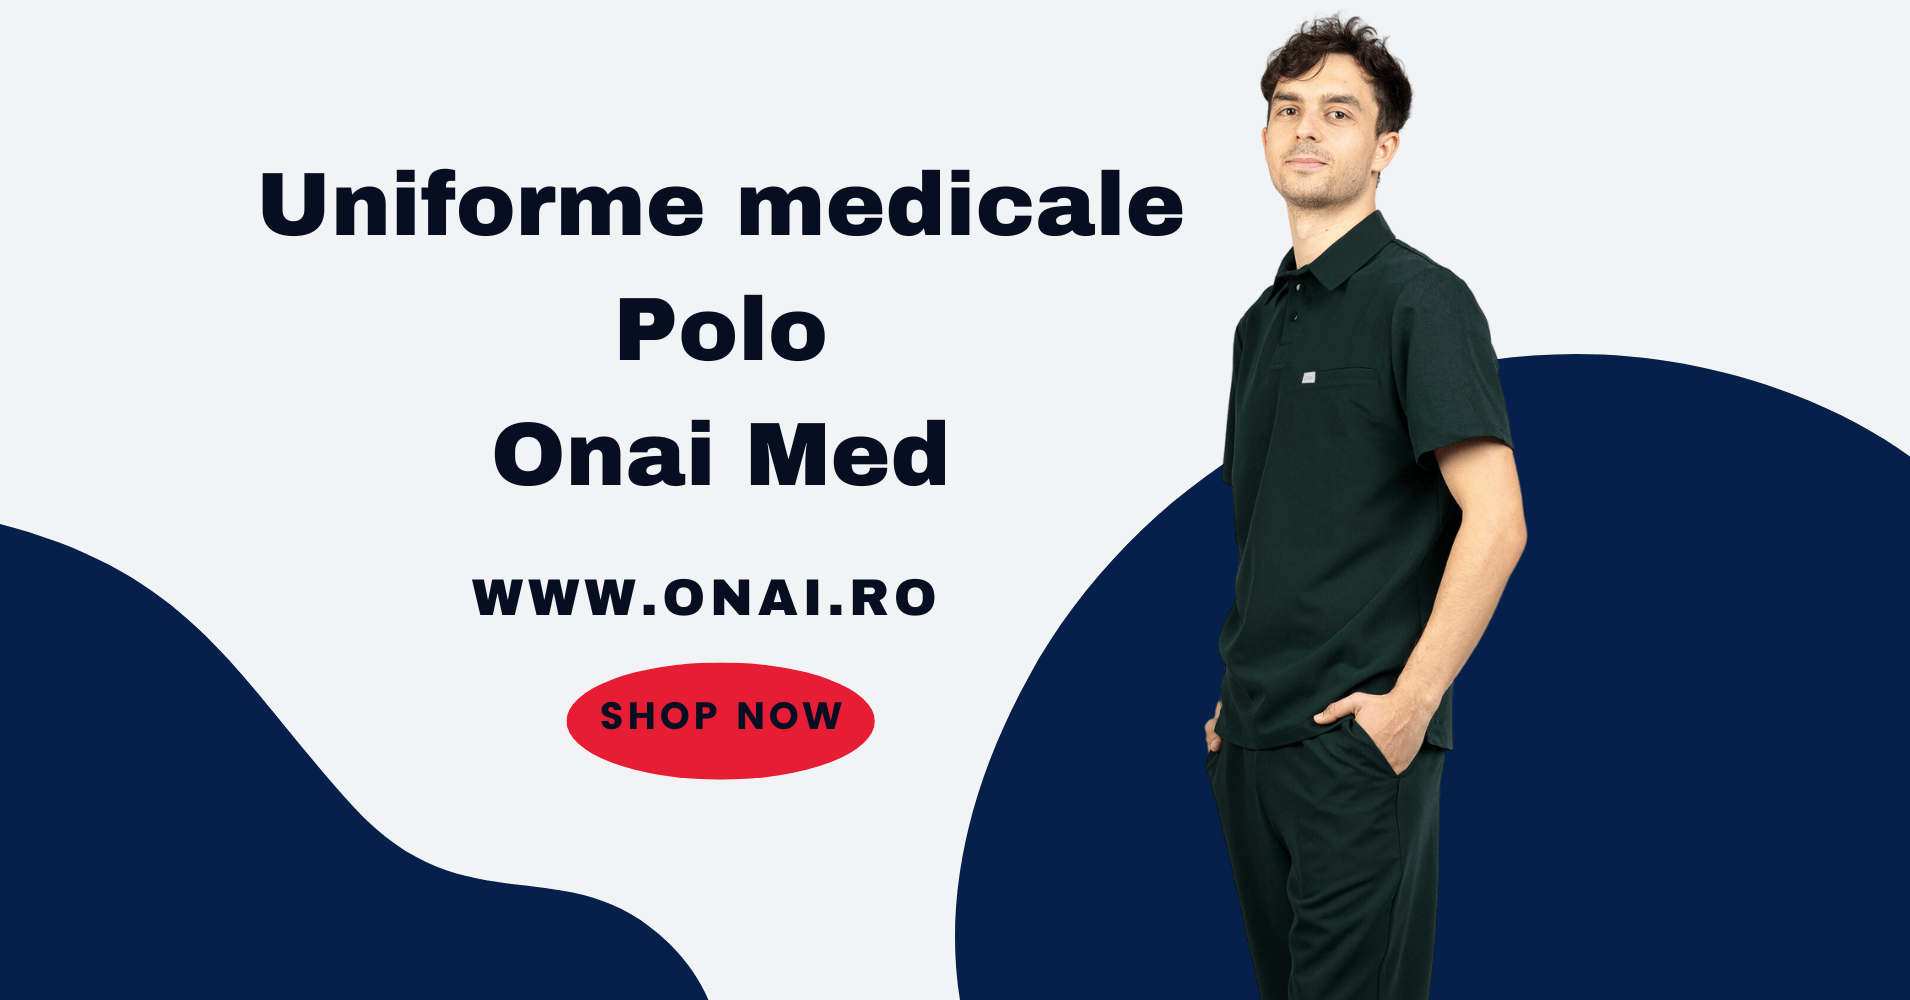 Uniforme medicale Polo Onai Med